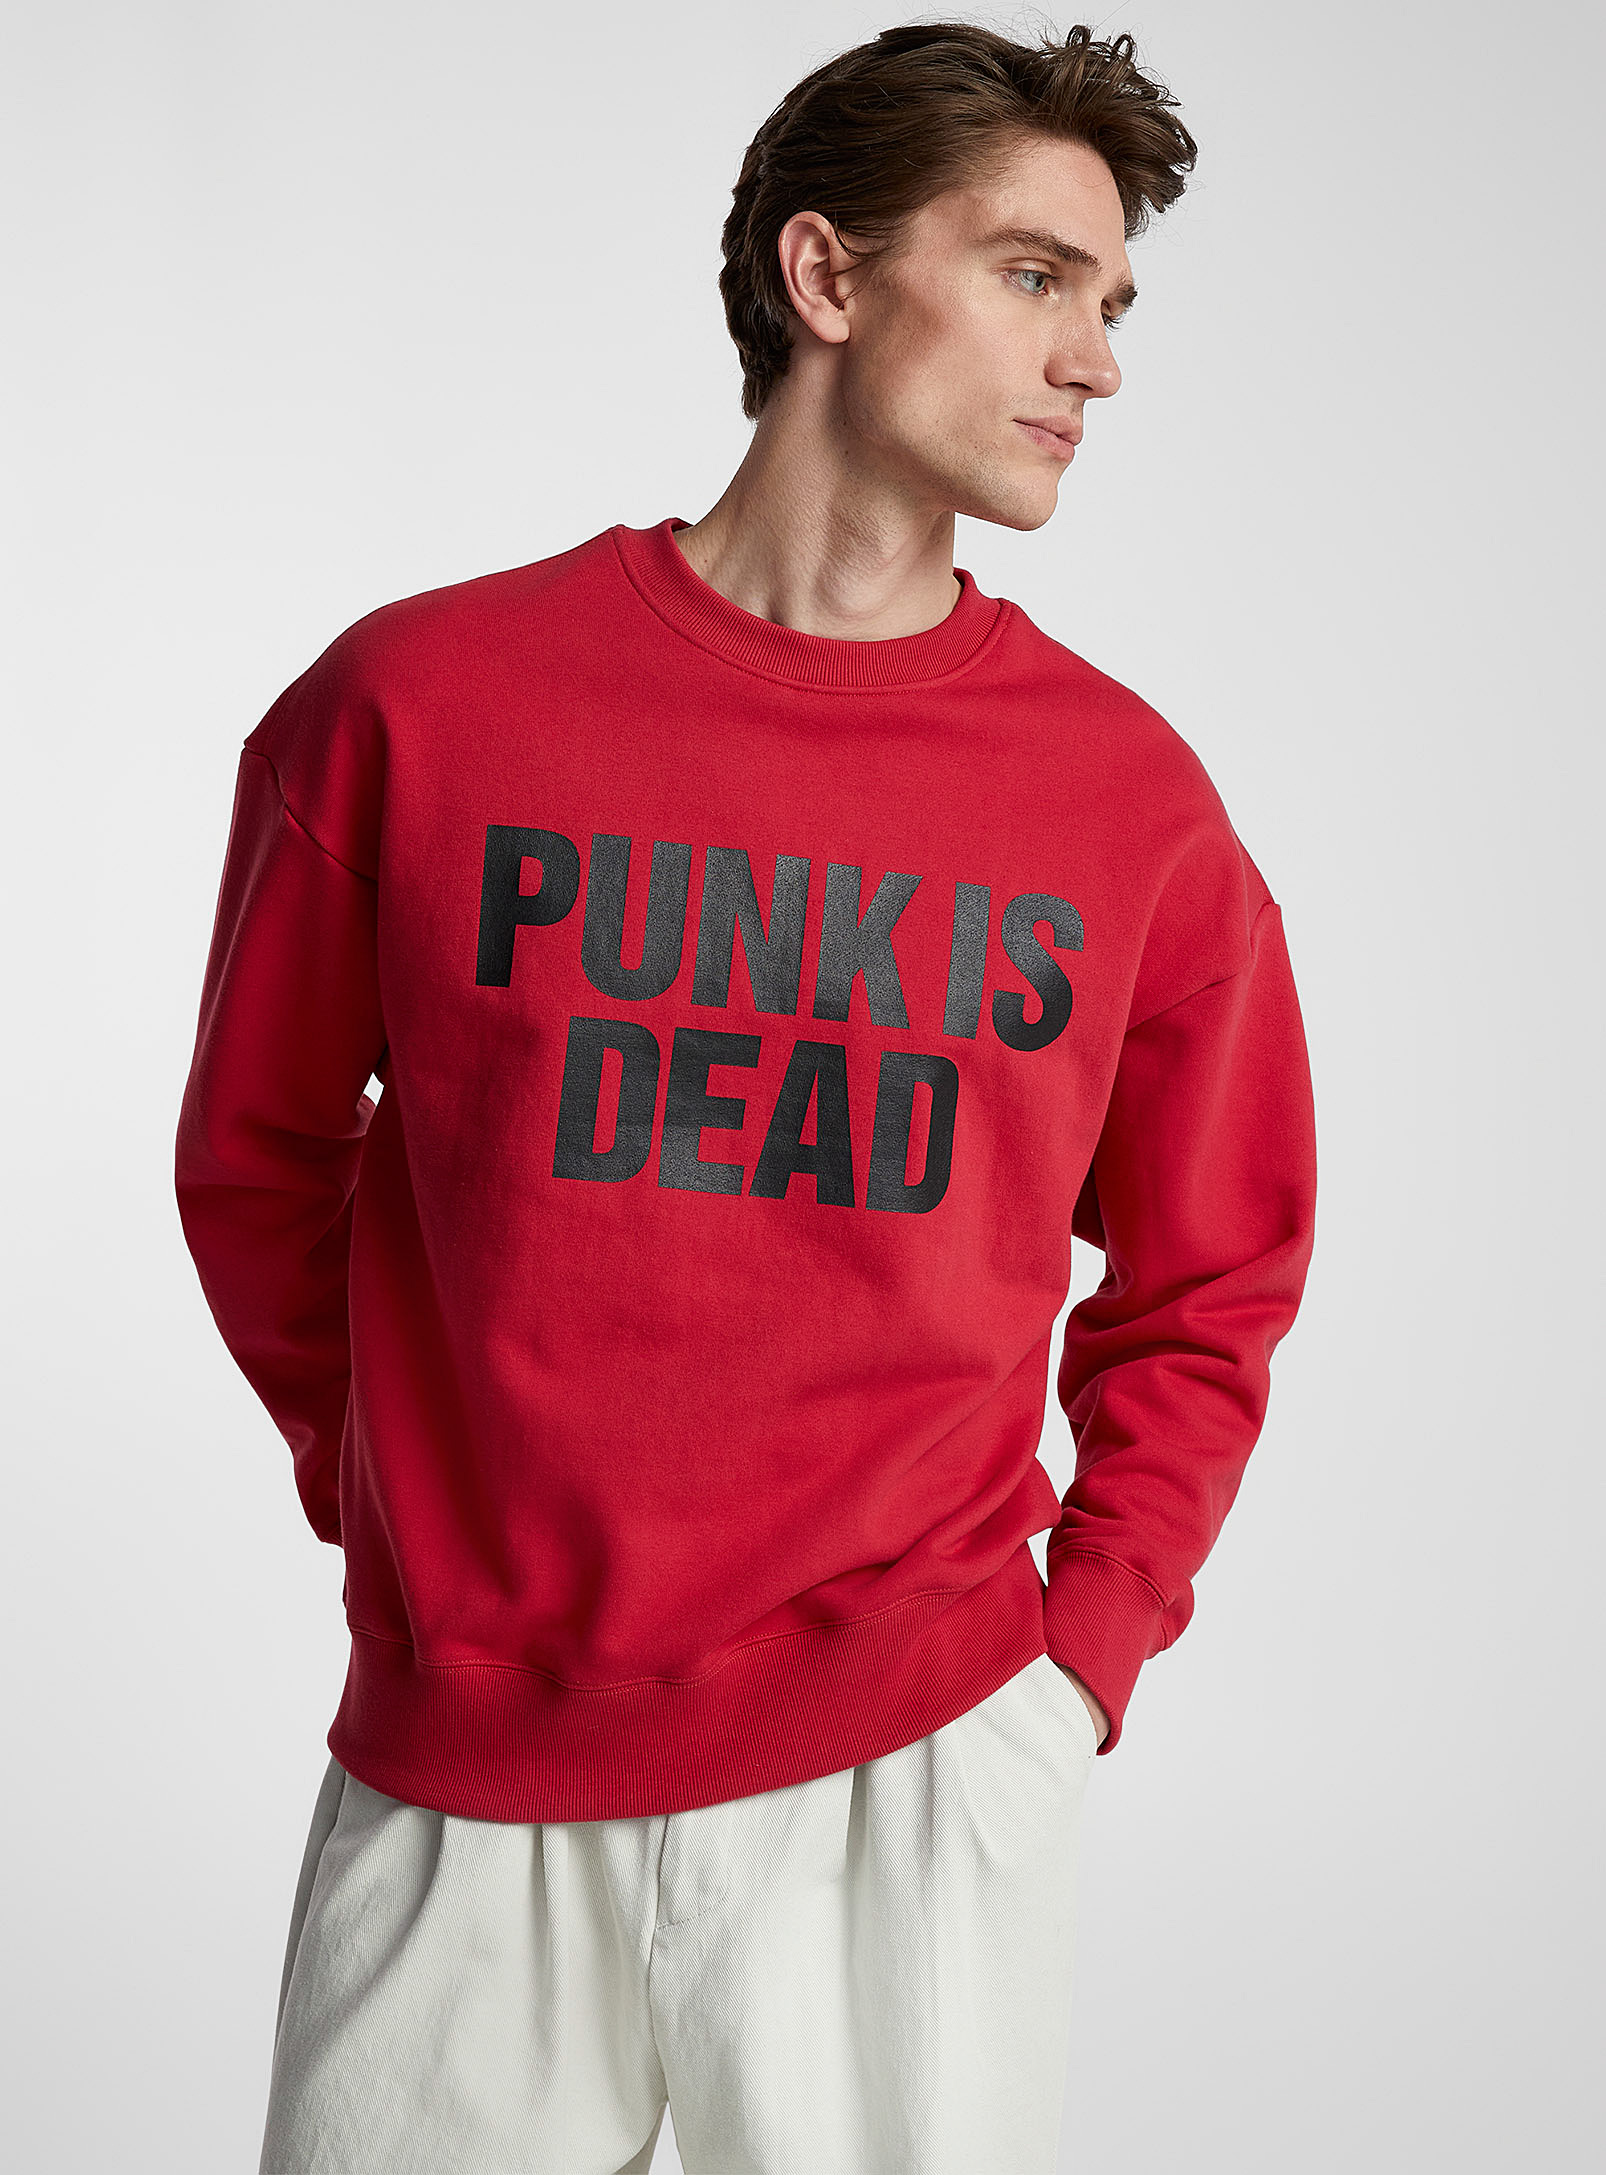 Tee Library Punk Is Dead Sweatshirt In Red